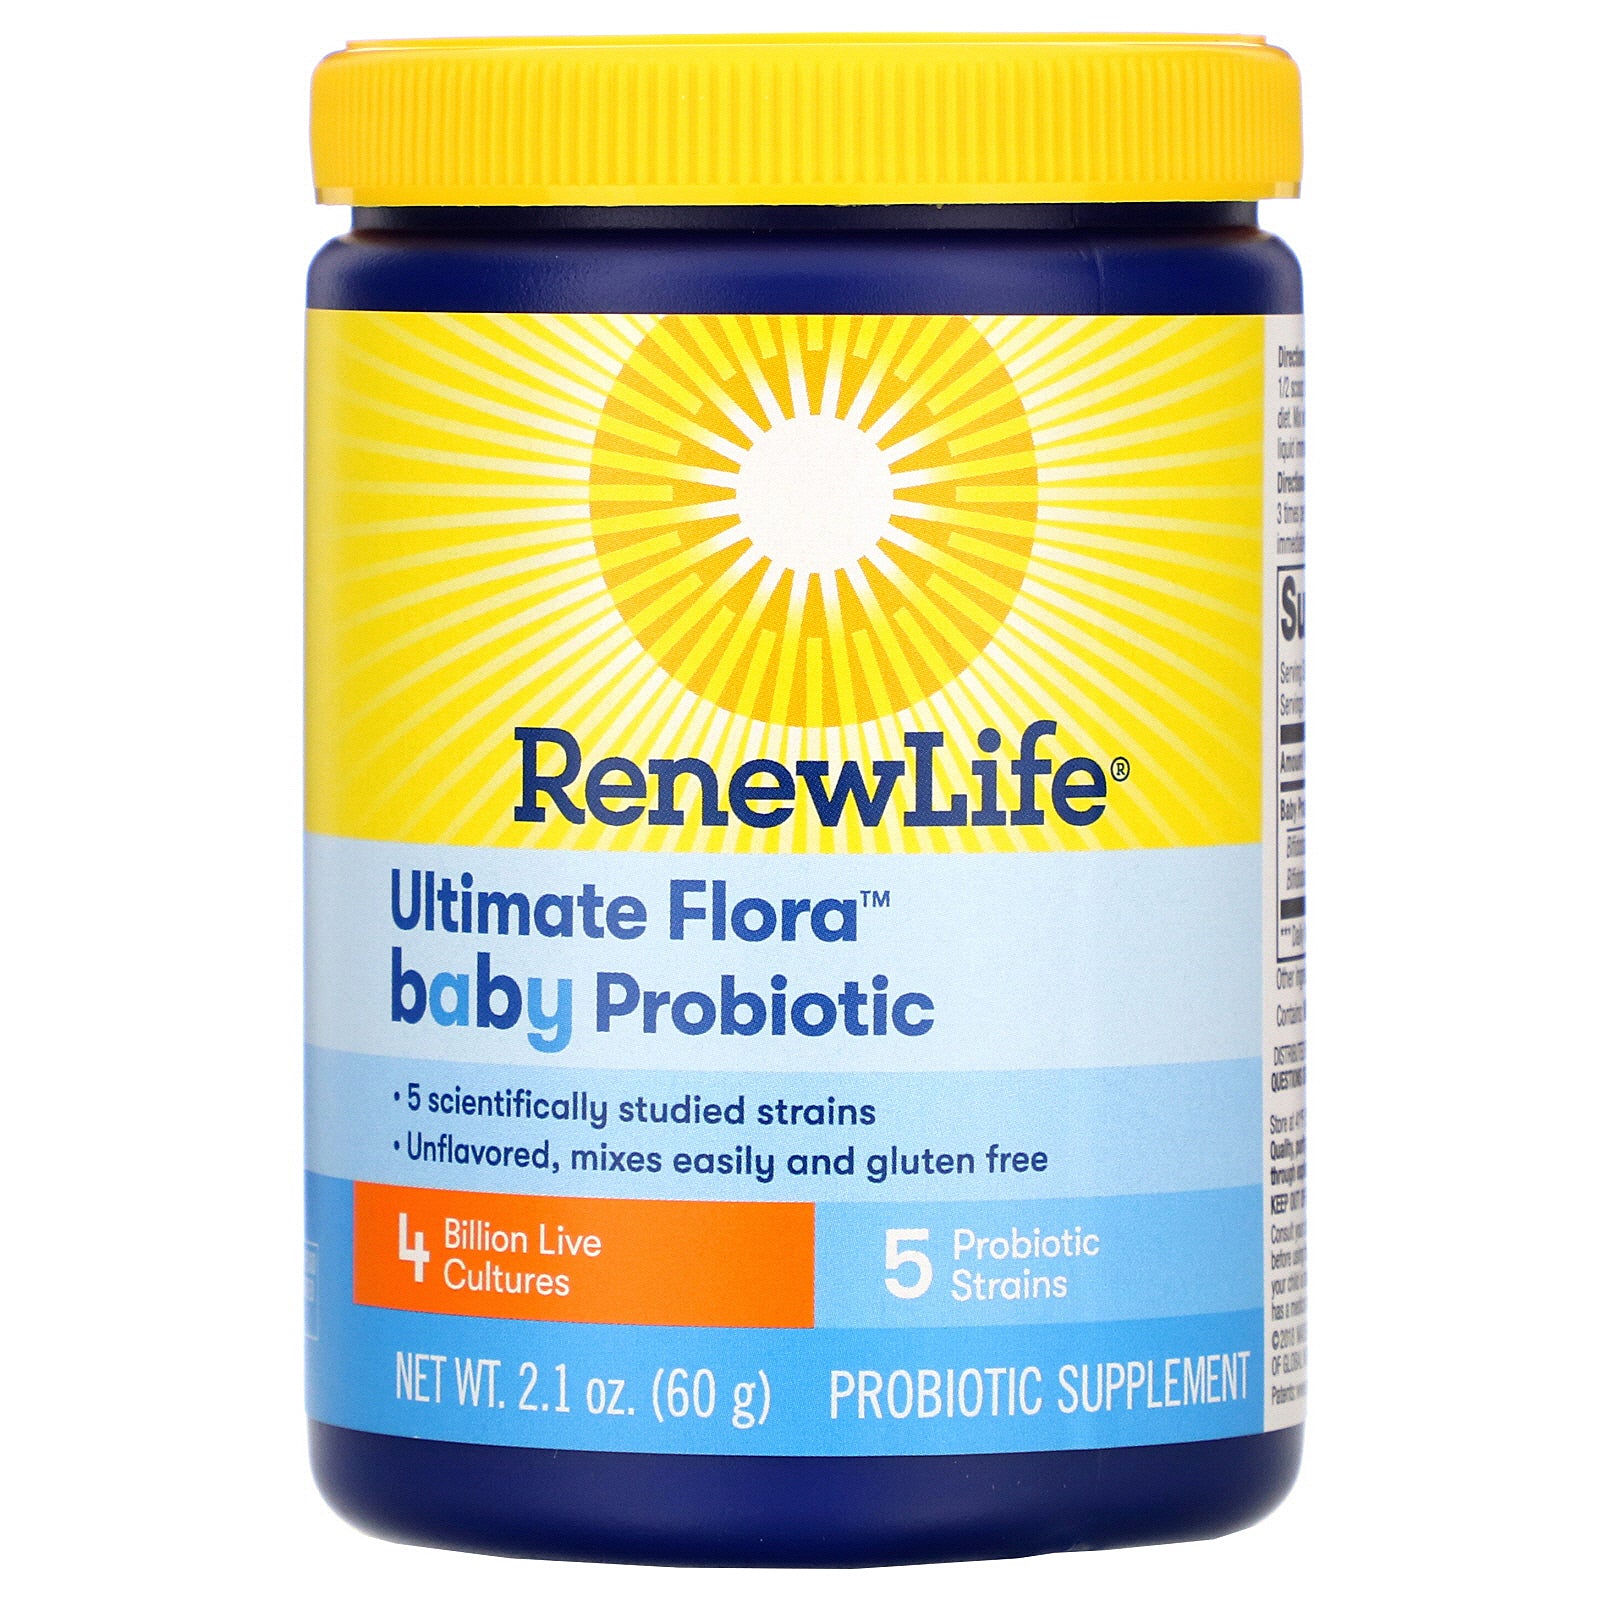 Renew Life, Ultimate Flora Baby Probiotic, 4 Billion Live Cultures